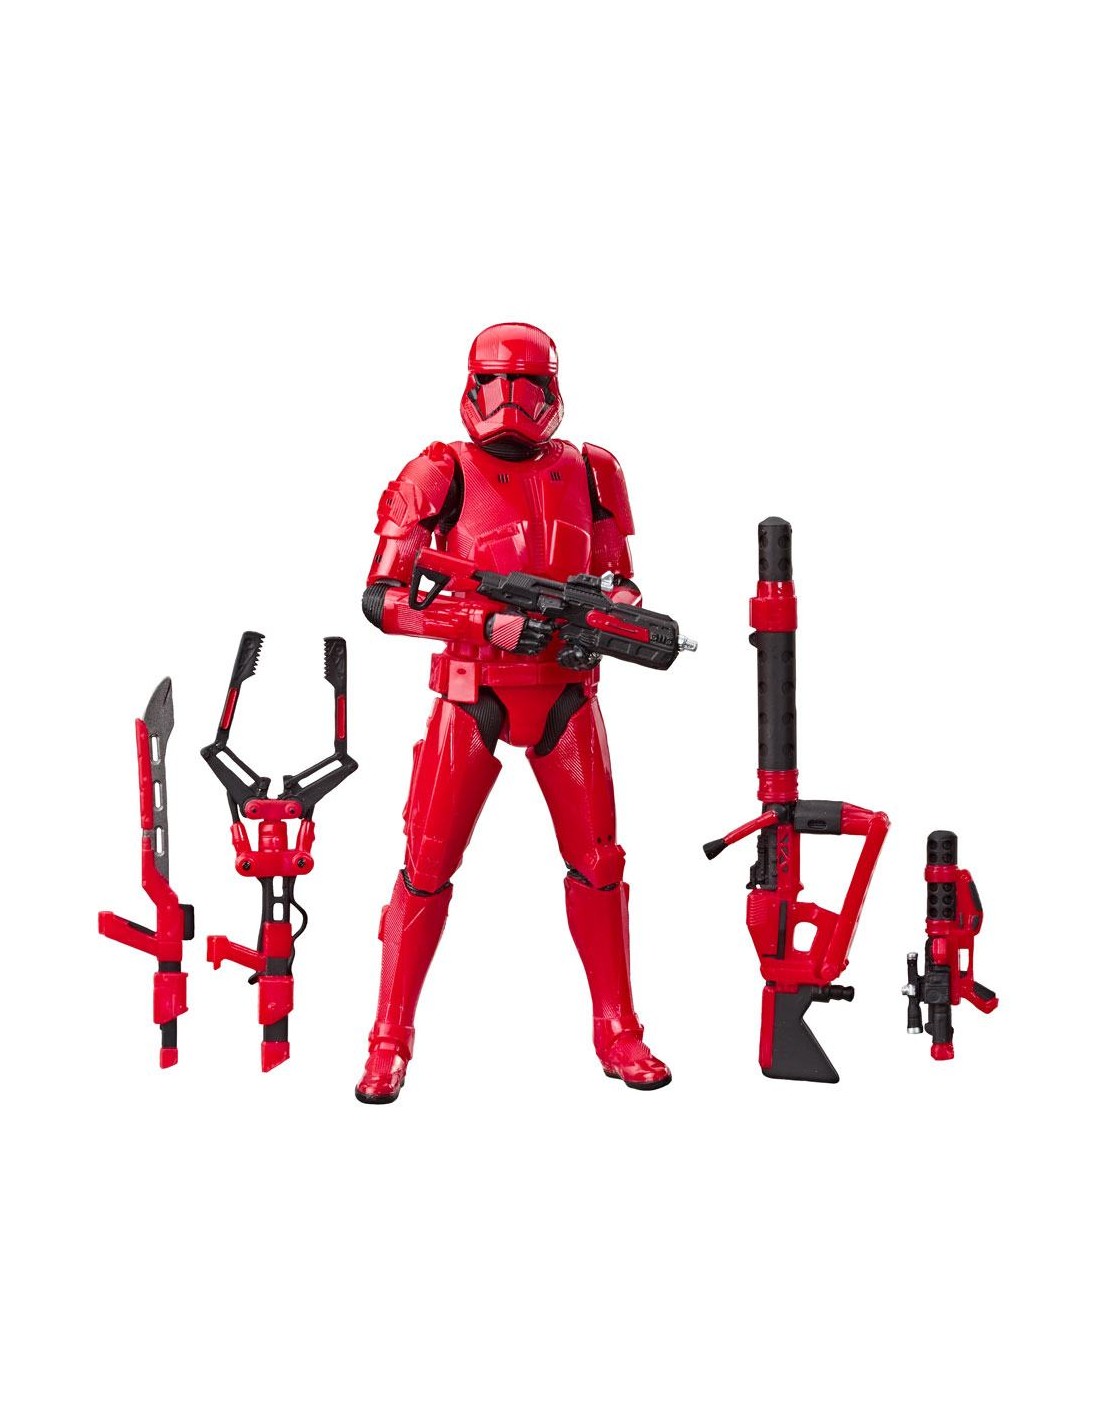 Star Wars Black Series Action Figure Sith Trooper SDCC 2019 Exclusive 15 cm